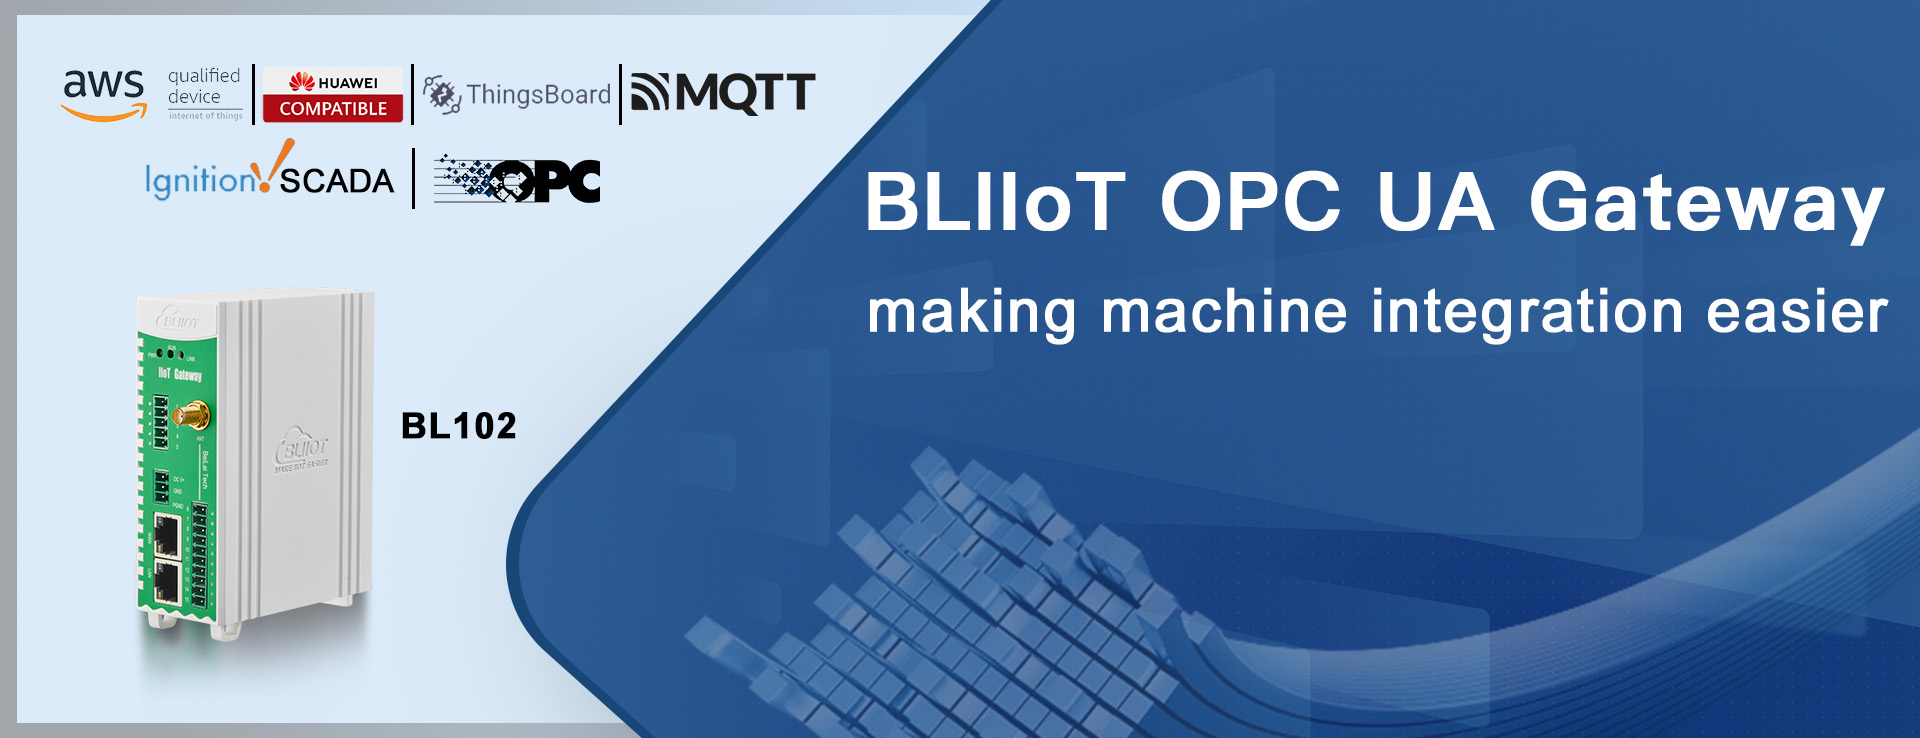 BLIIOT OPC UA Gateway Making Machine Integration Easier